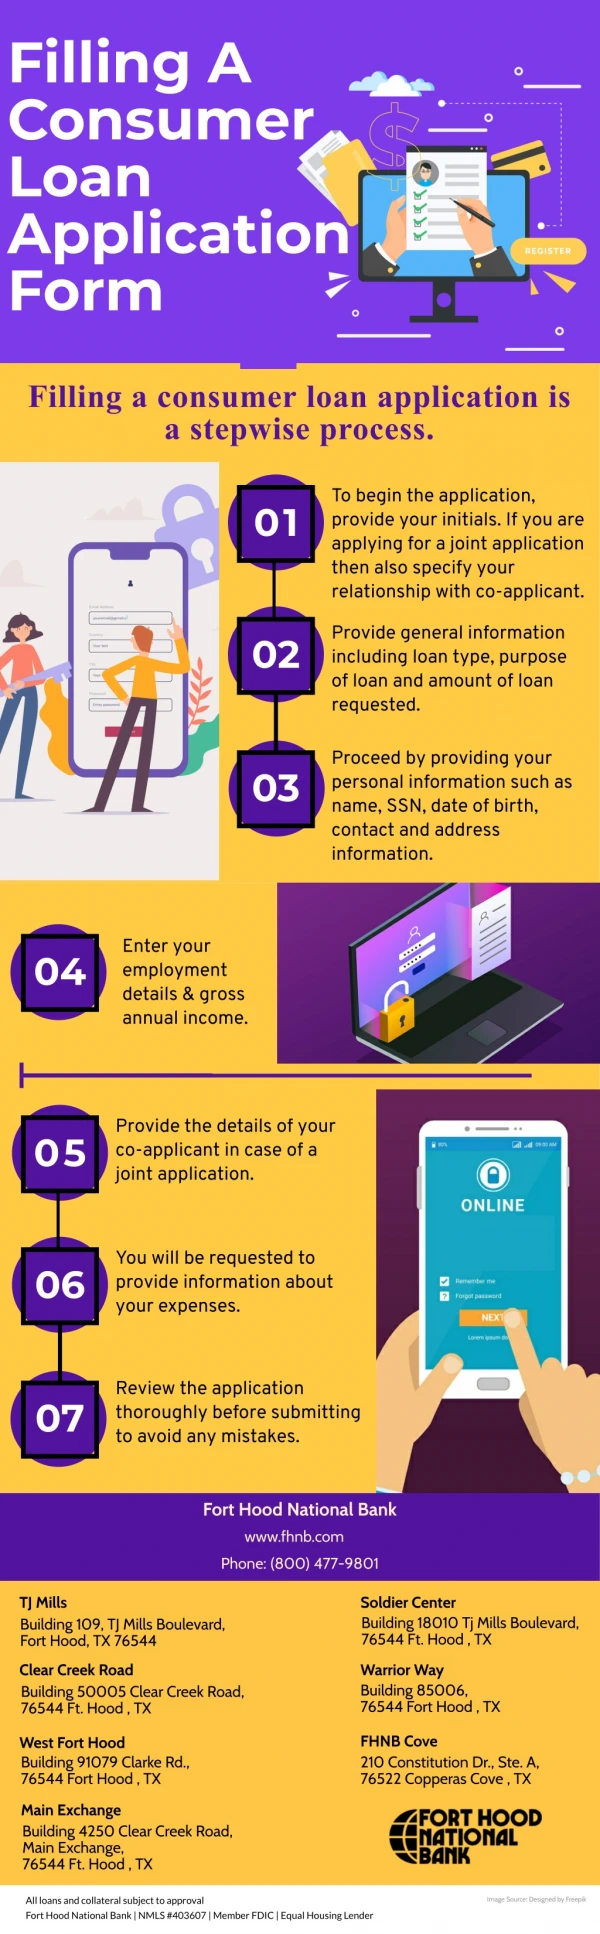 Filling A Consumer Loan Application Form